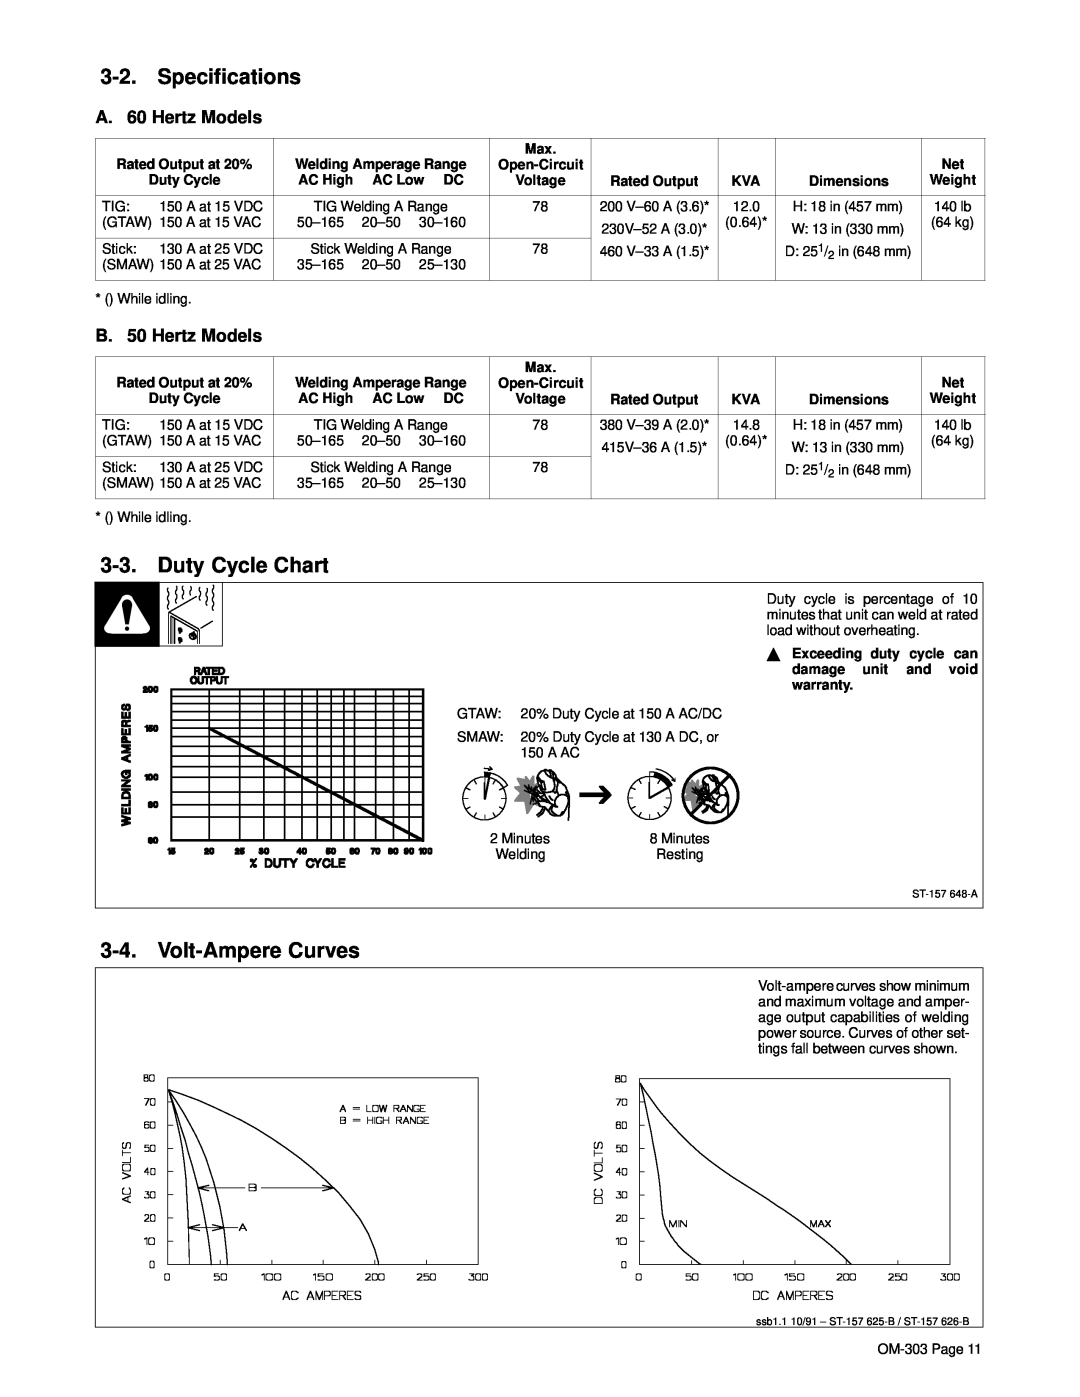 Hobart OM-303 manual Specifications, Duty Cycle Chart, Volt-Ampere Curves, Hertz Models 